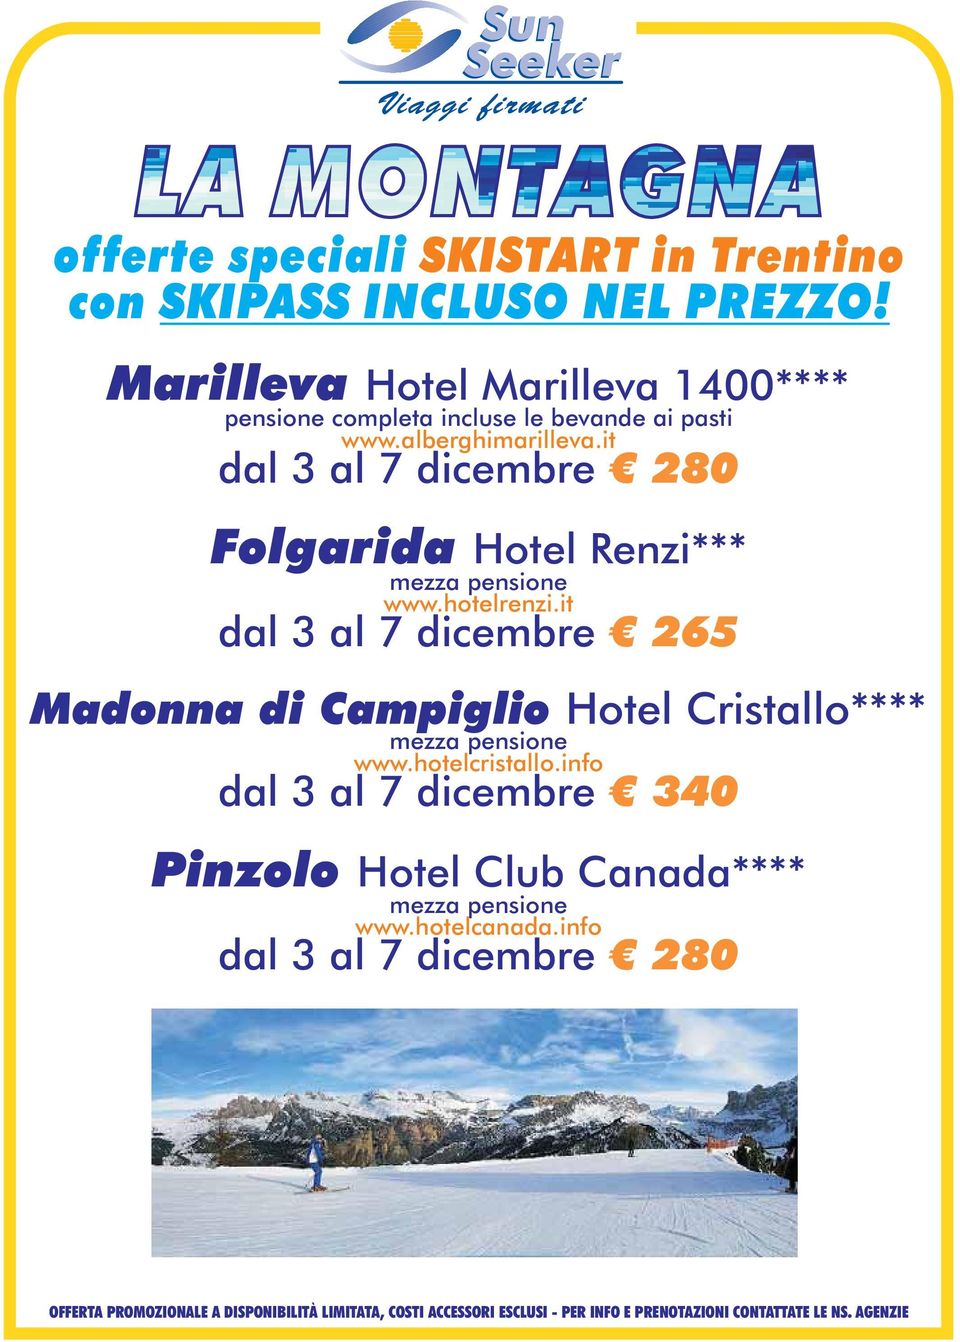 it dal 3 al 7 dicembre dal 3 al 7 dicembre dal 3 al 7 dicembre Hotel Renzi*** www.hotelrenzi.